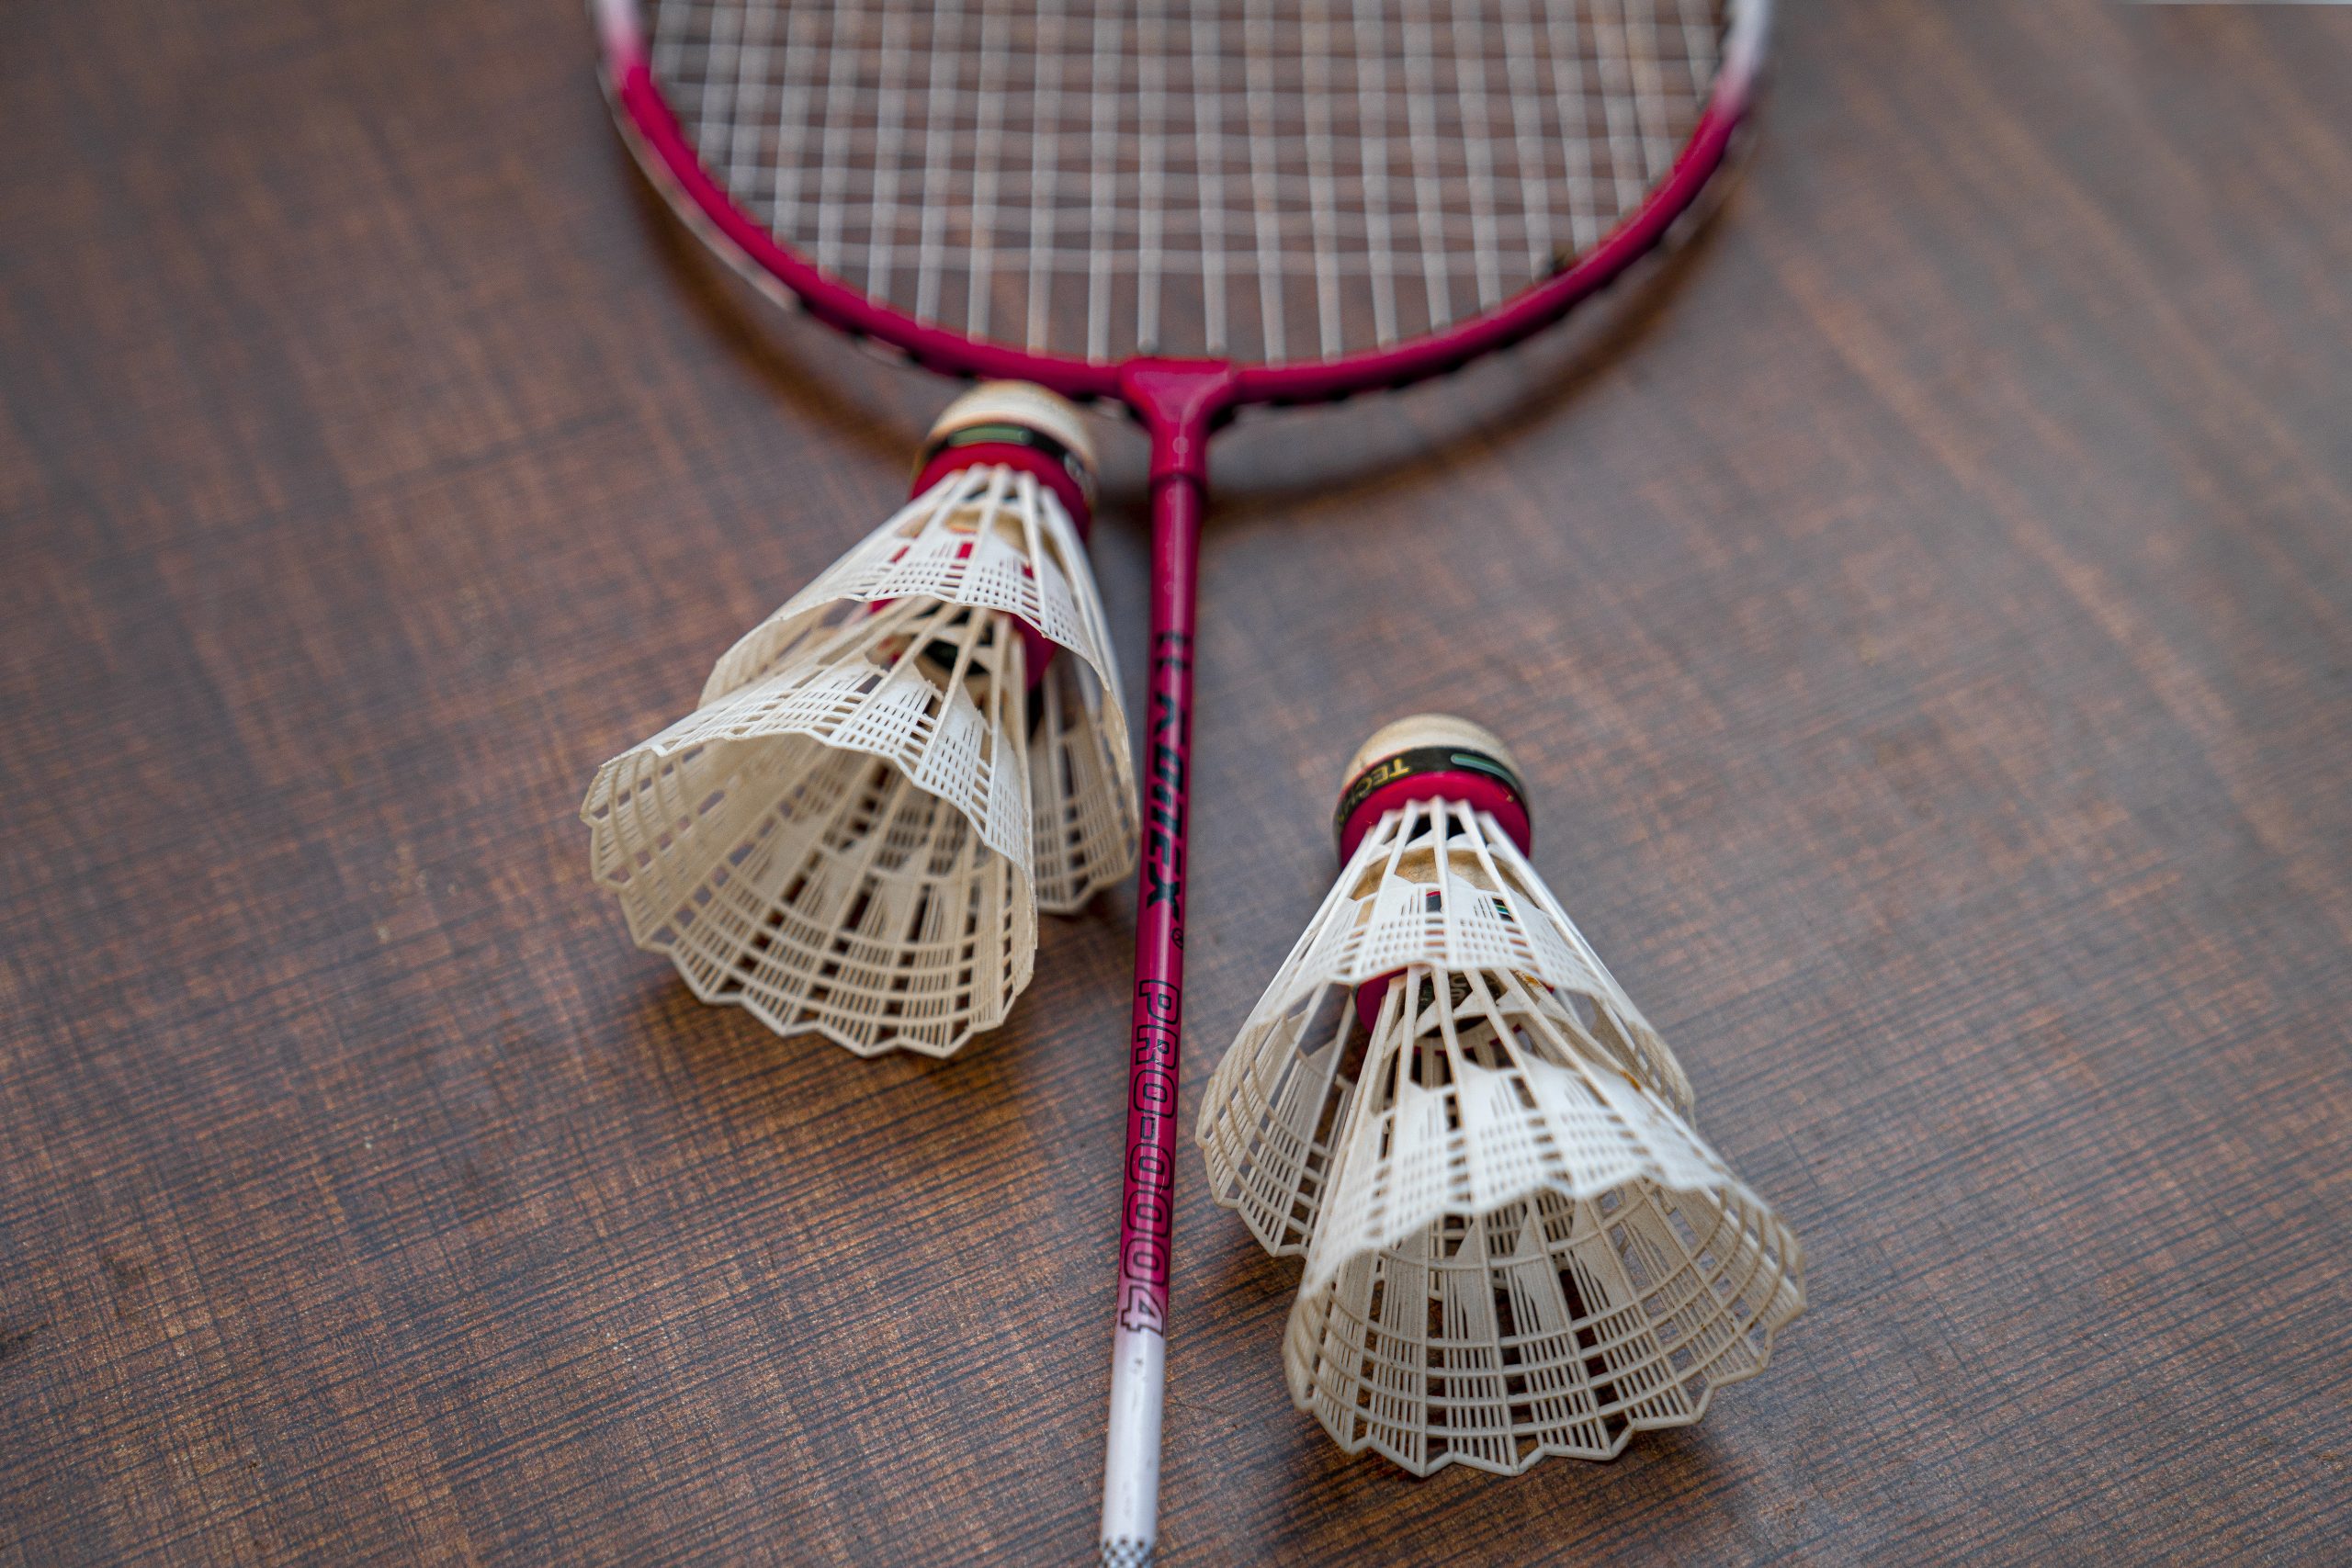 Equipment for badminton